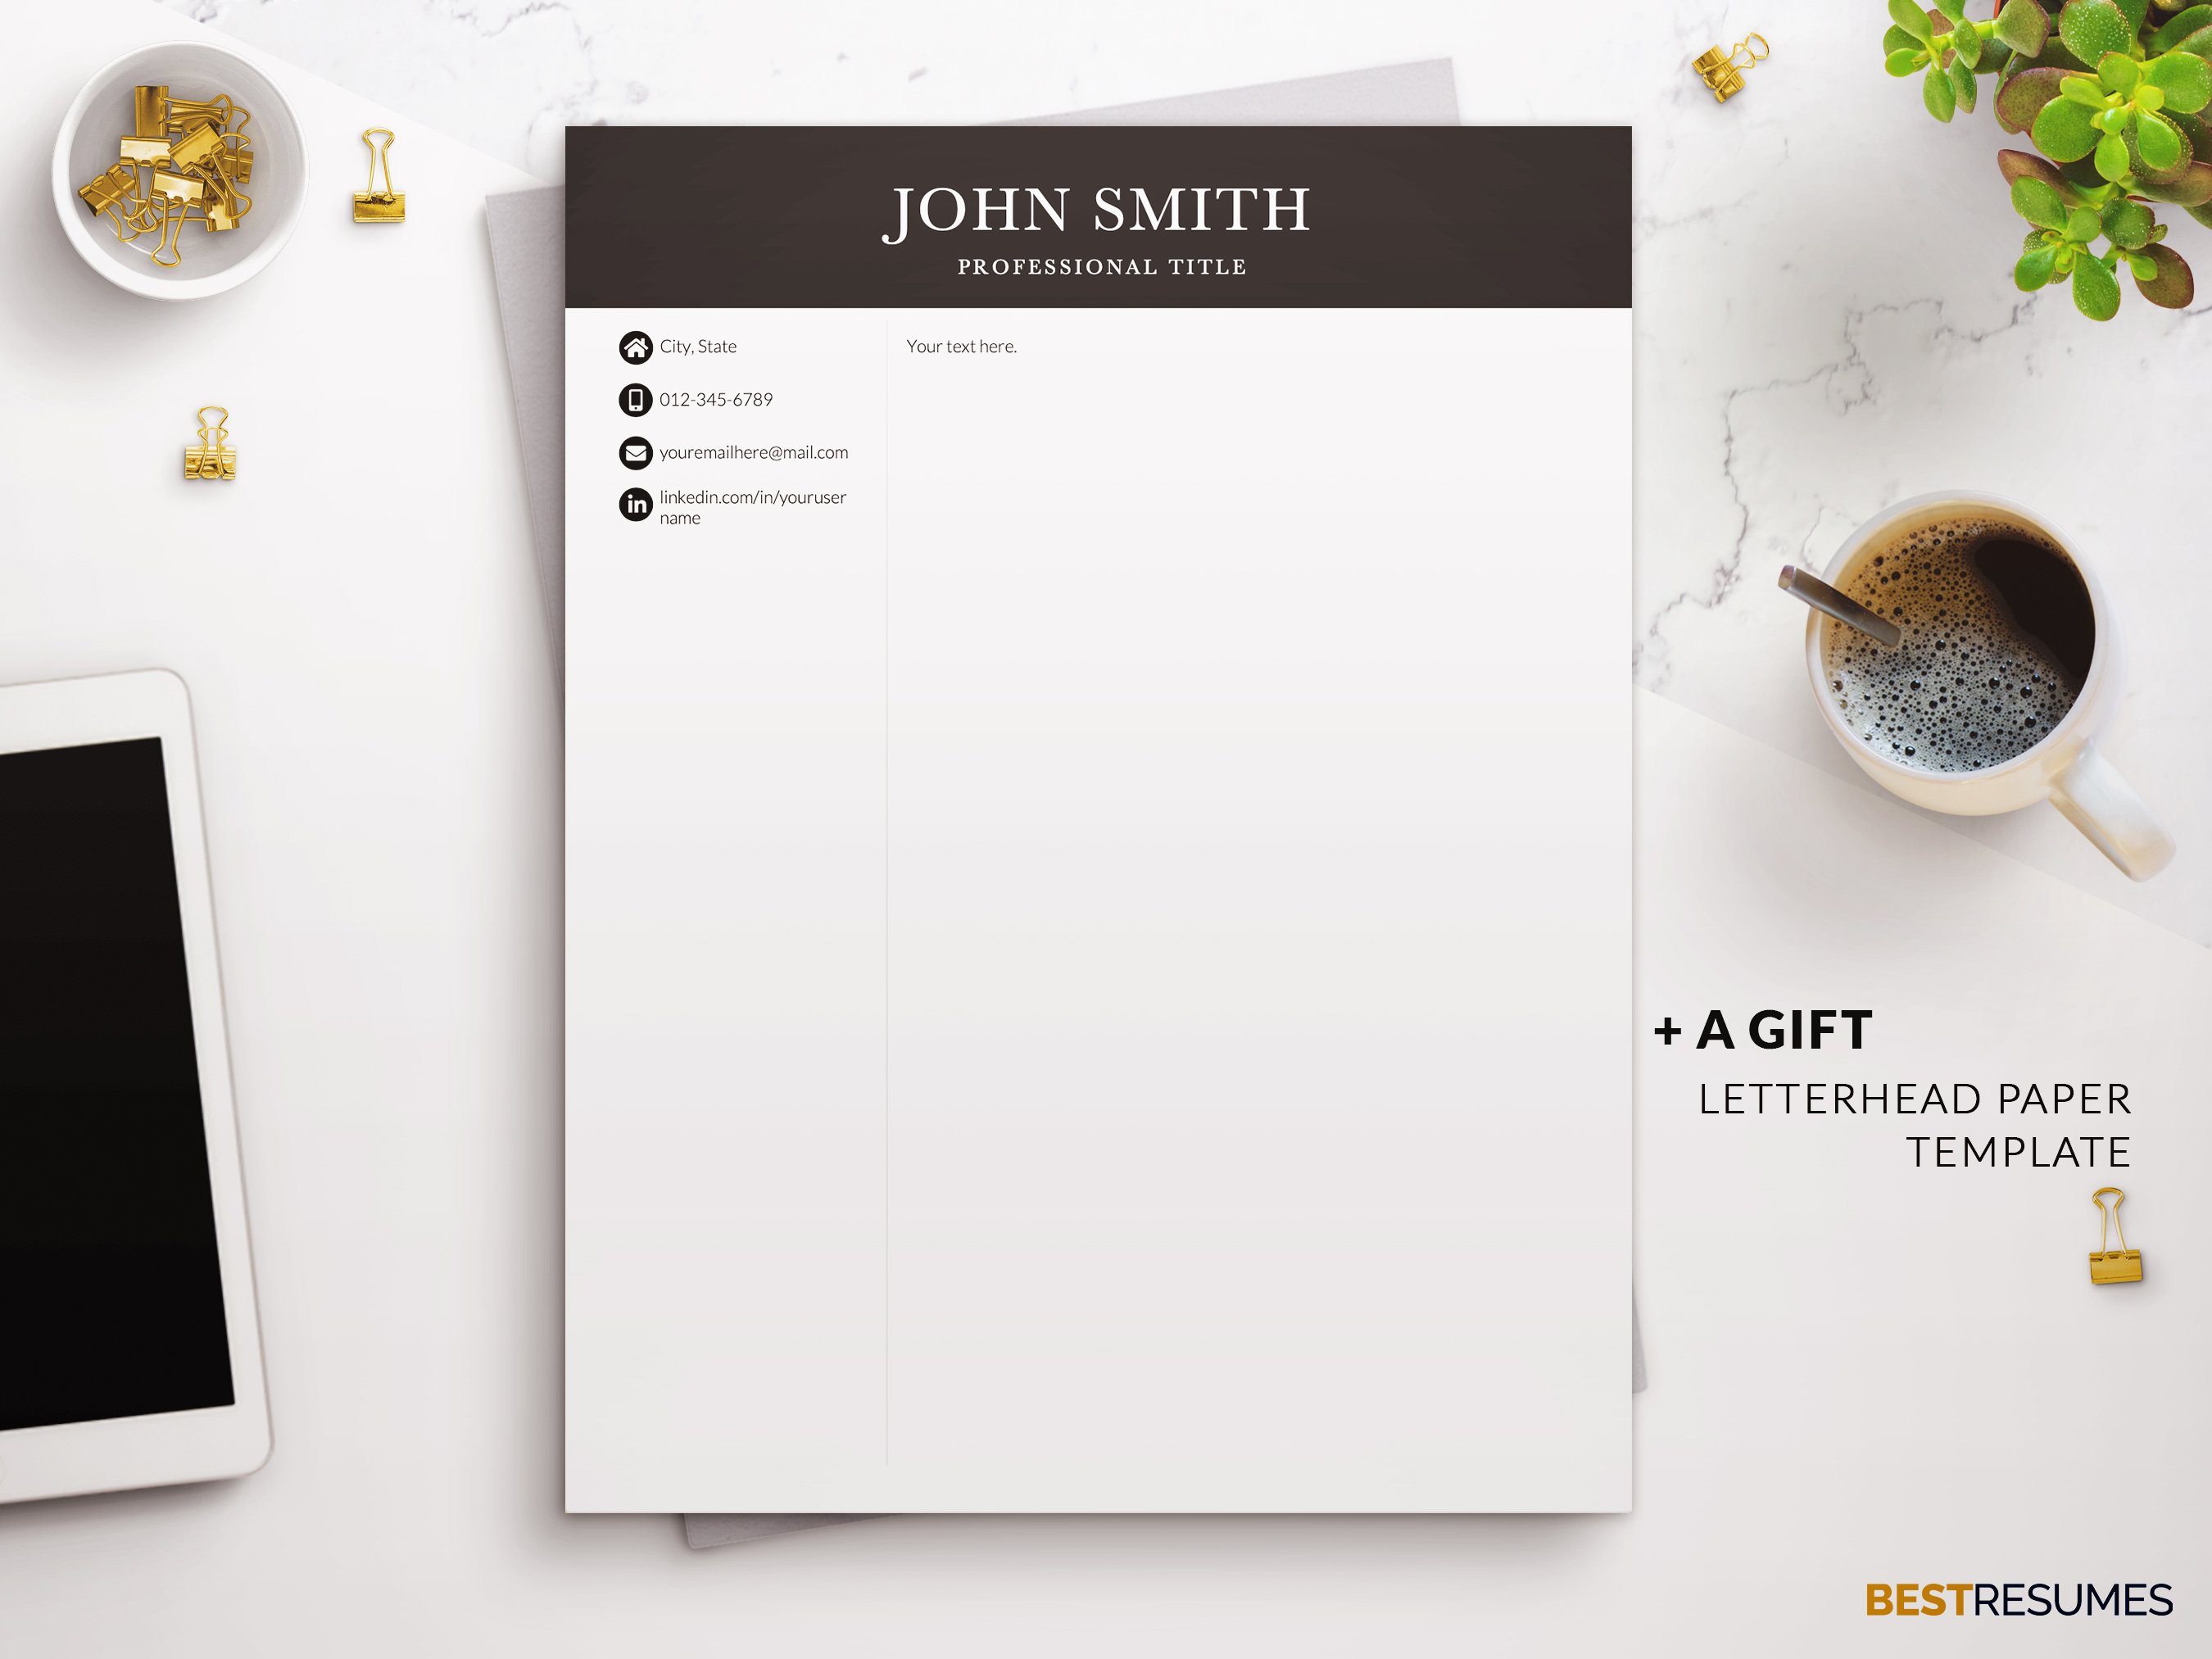 marketing resume template letterhead john smith 602